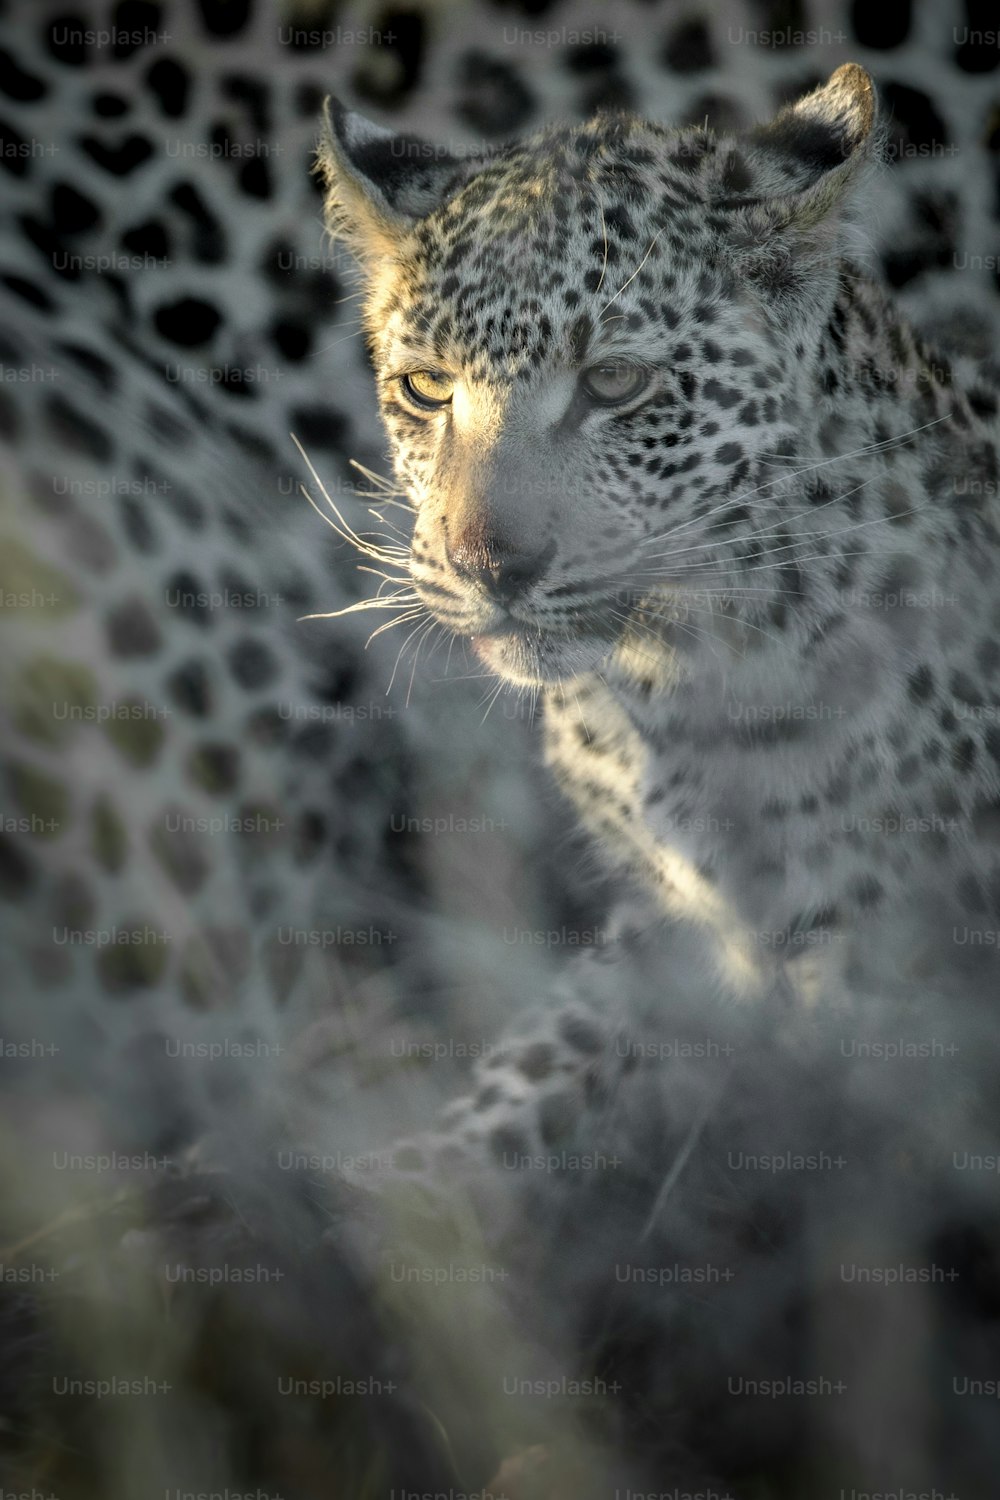 Leopard Pattern Pictures  Download Free Images on Unsplash